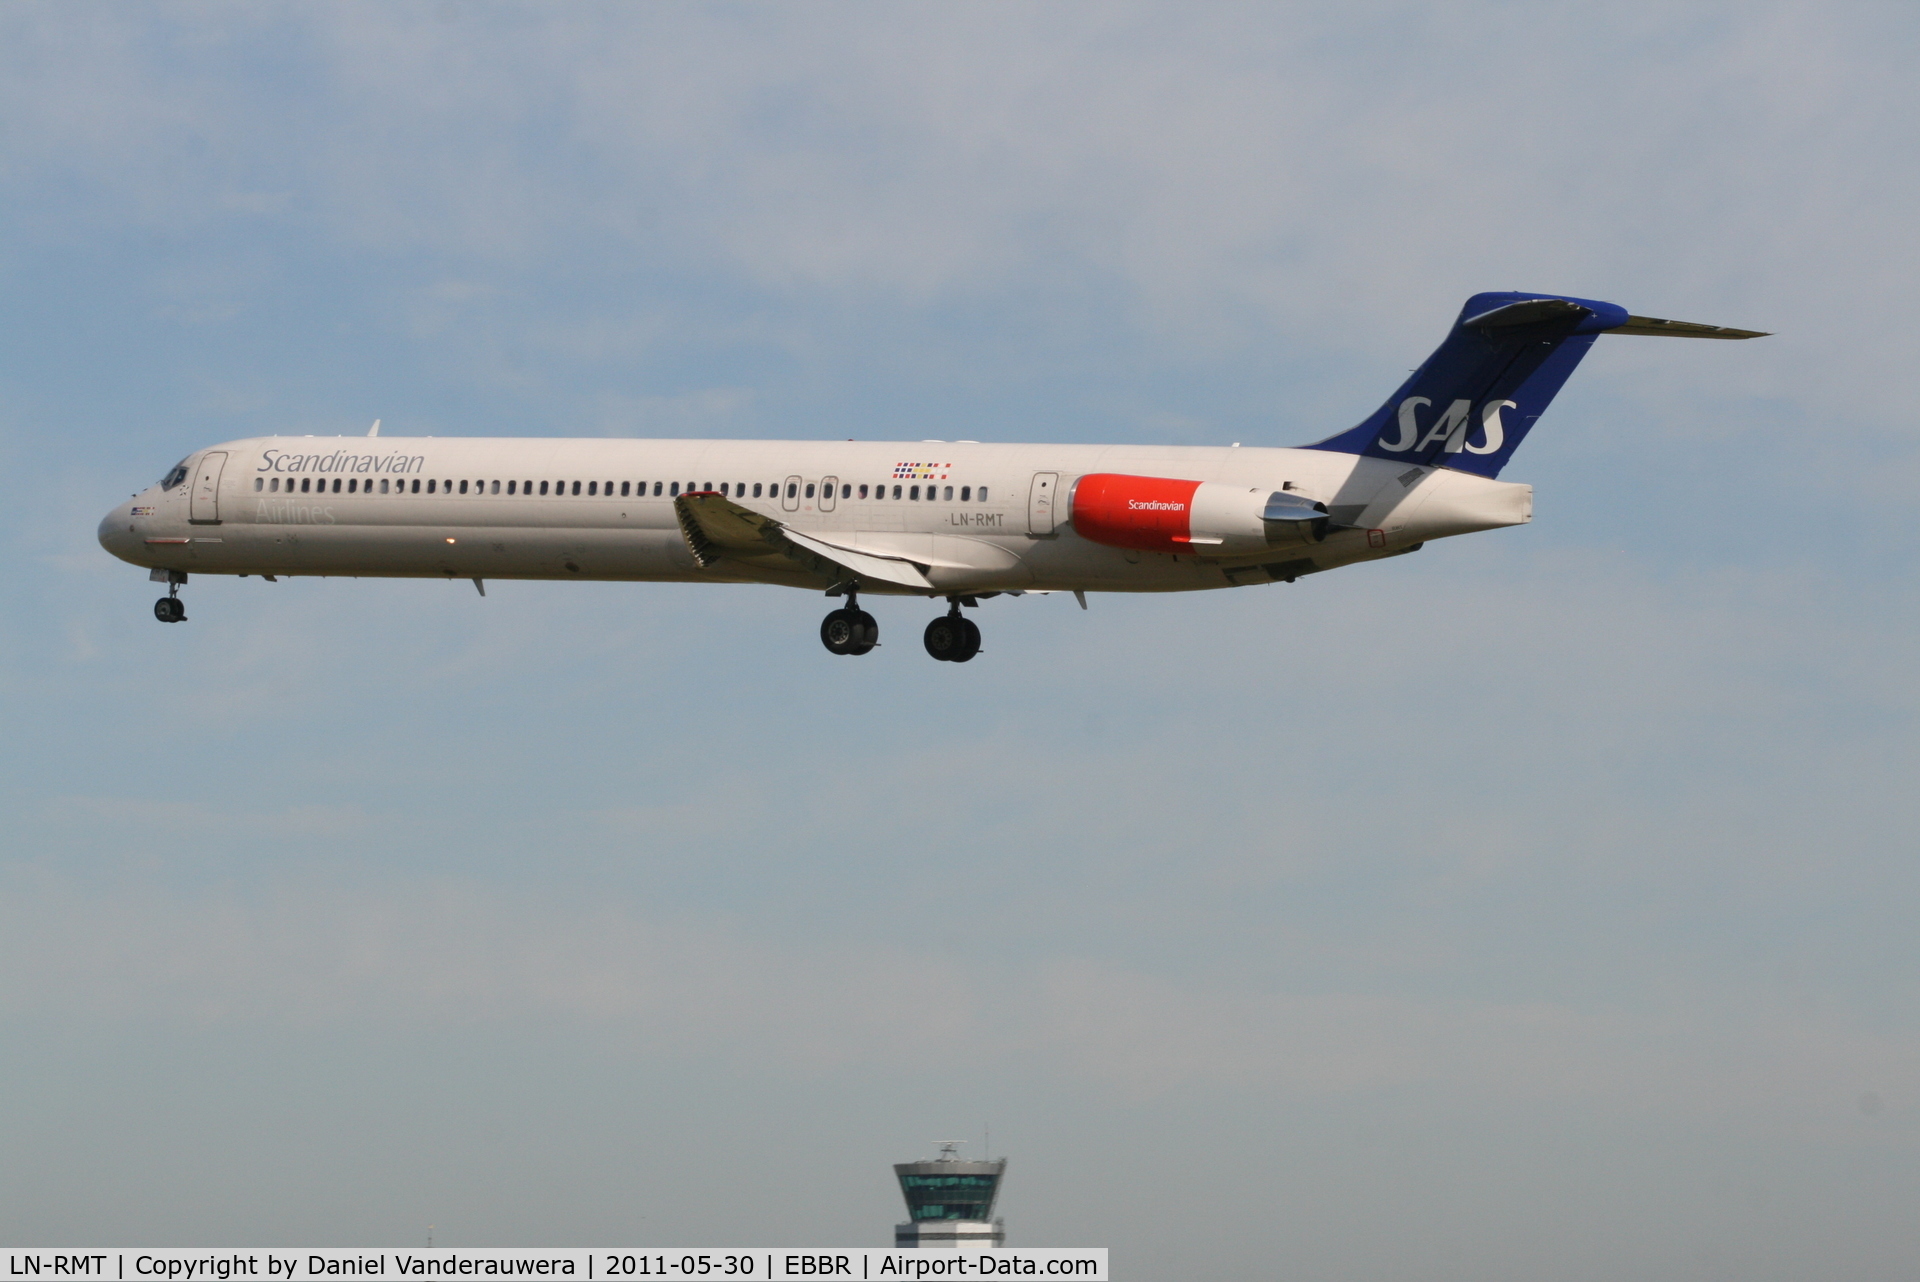 LN-RMT, 1991 McDonnell Douglas MD-82 (DC-9-82) C/N 53001, Flight SK589 is descending to RWY 25L